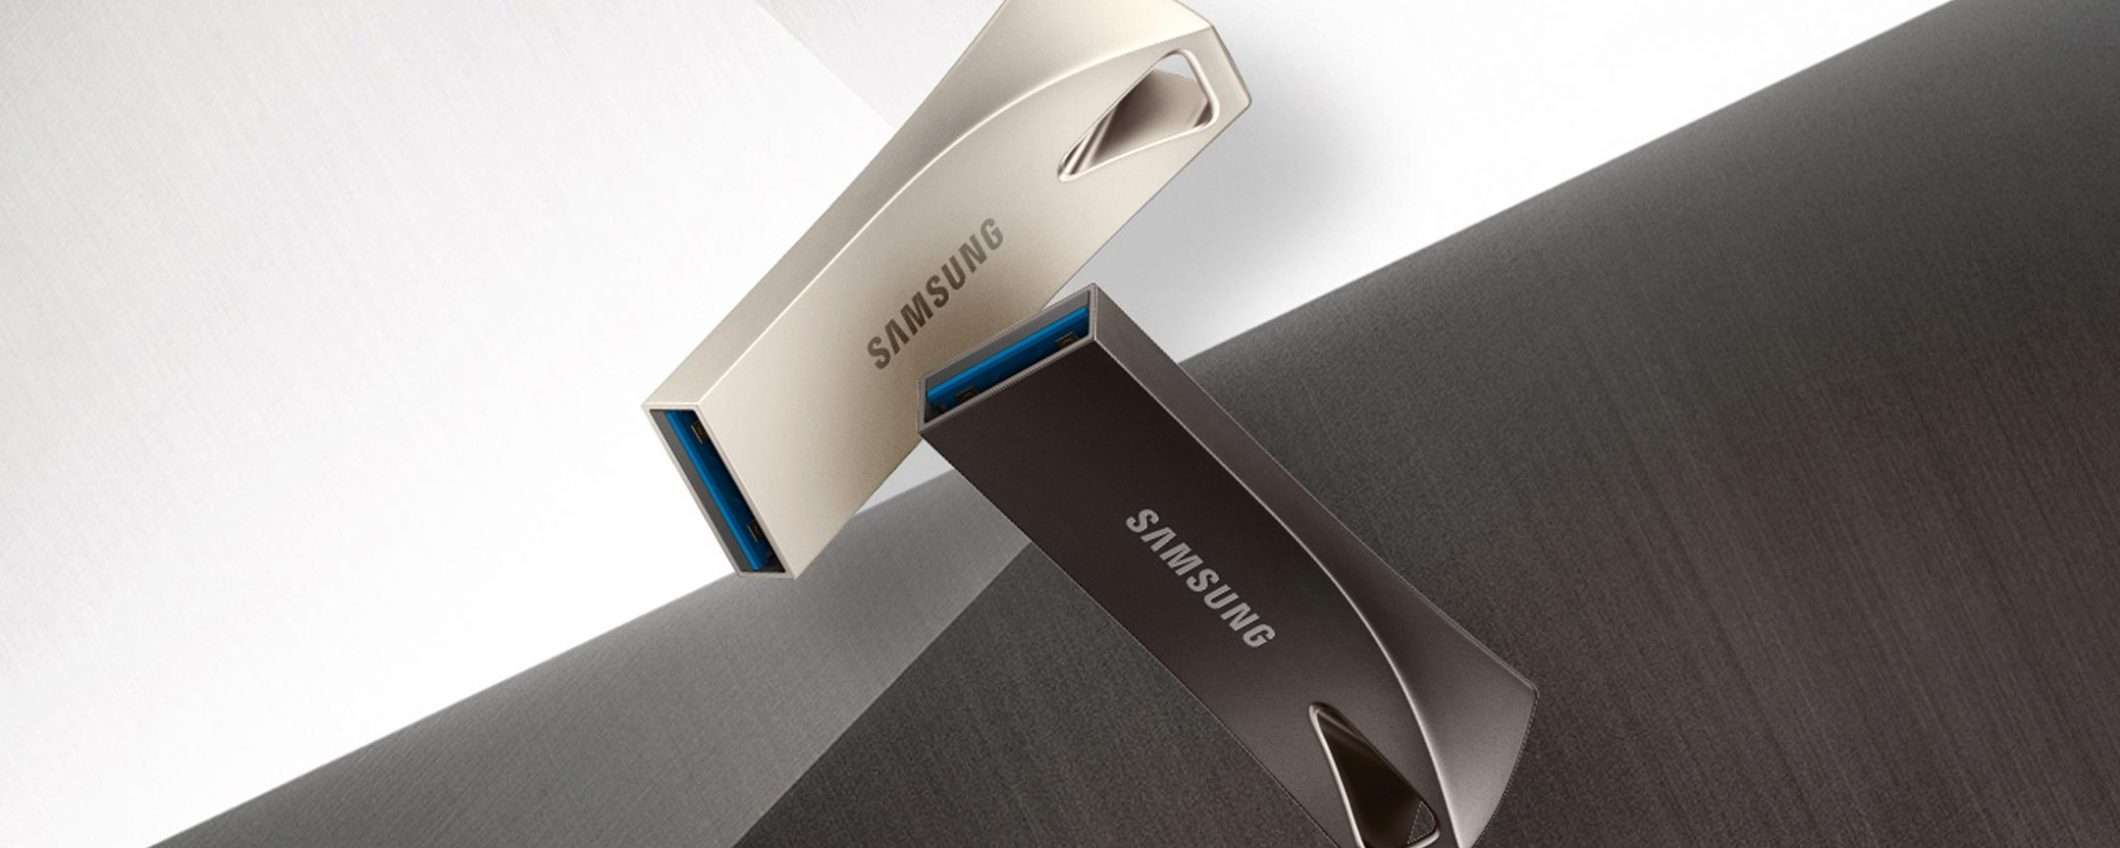 Samsung Bar Plus: Flash Drive USB in offerta a -34%